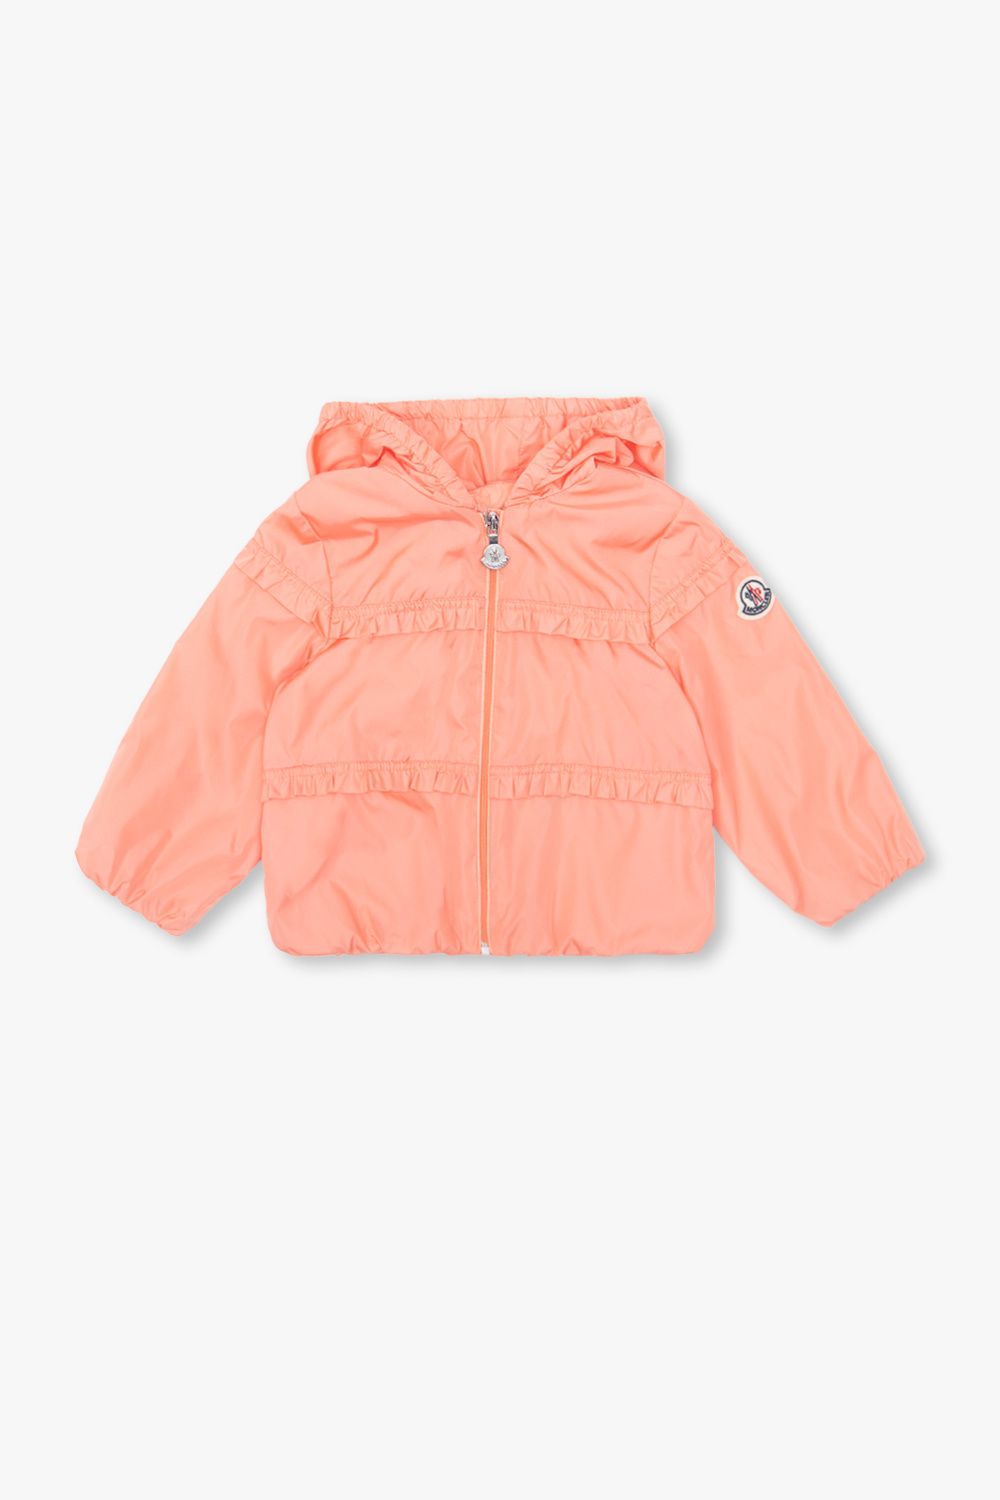 Moncler Enfant ‘Hiti’ jacket